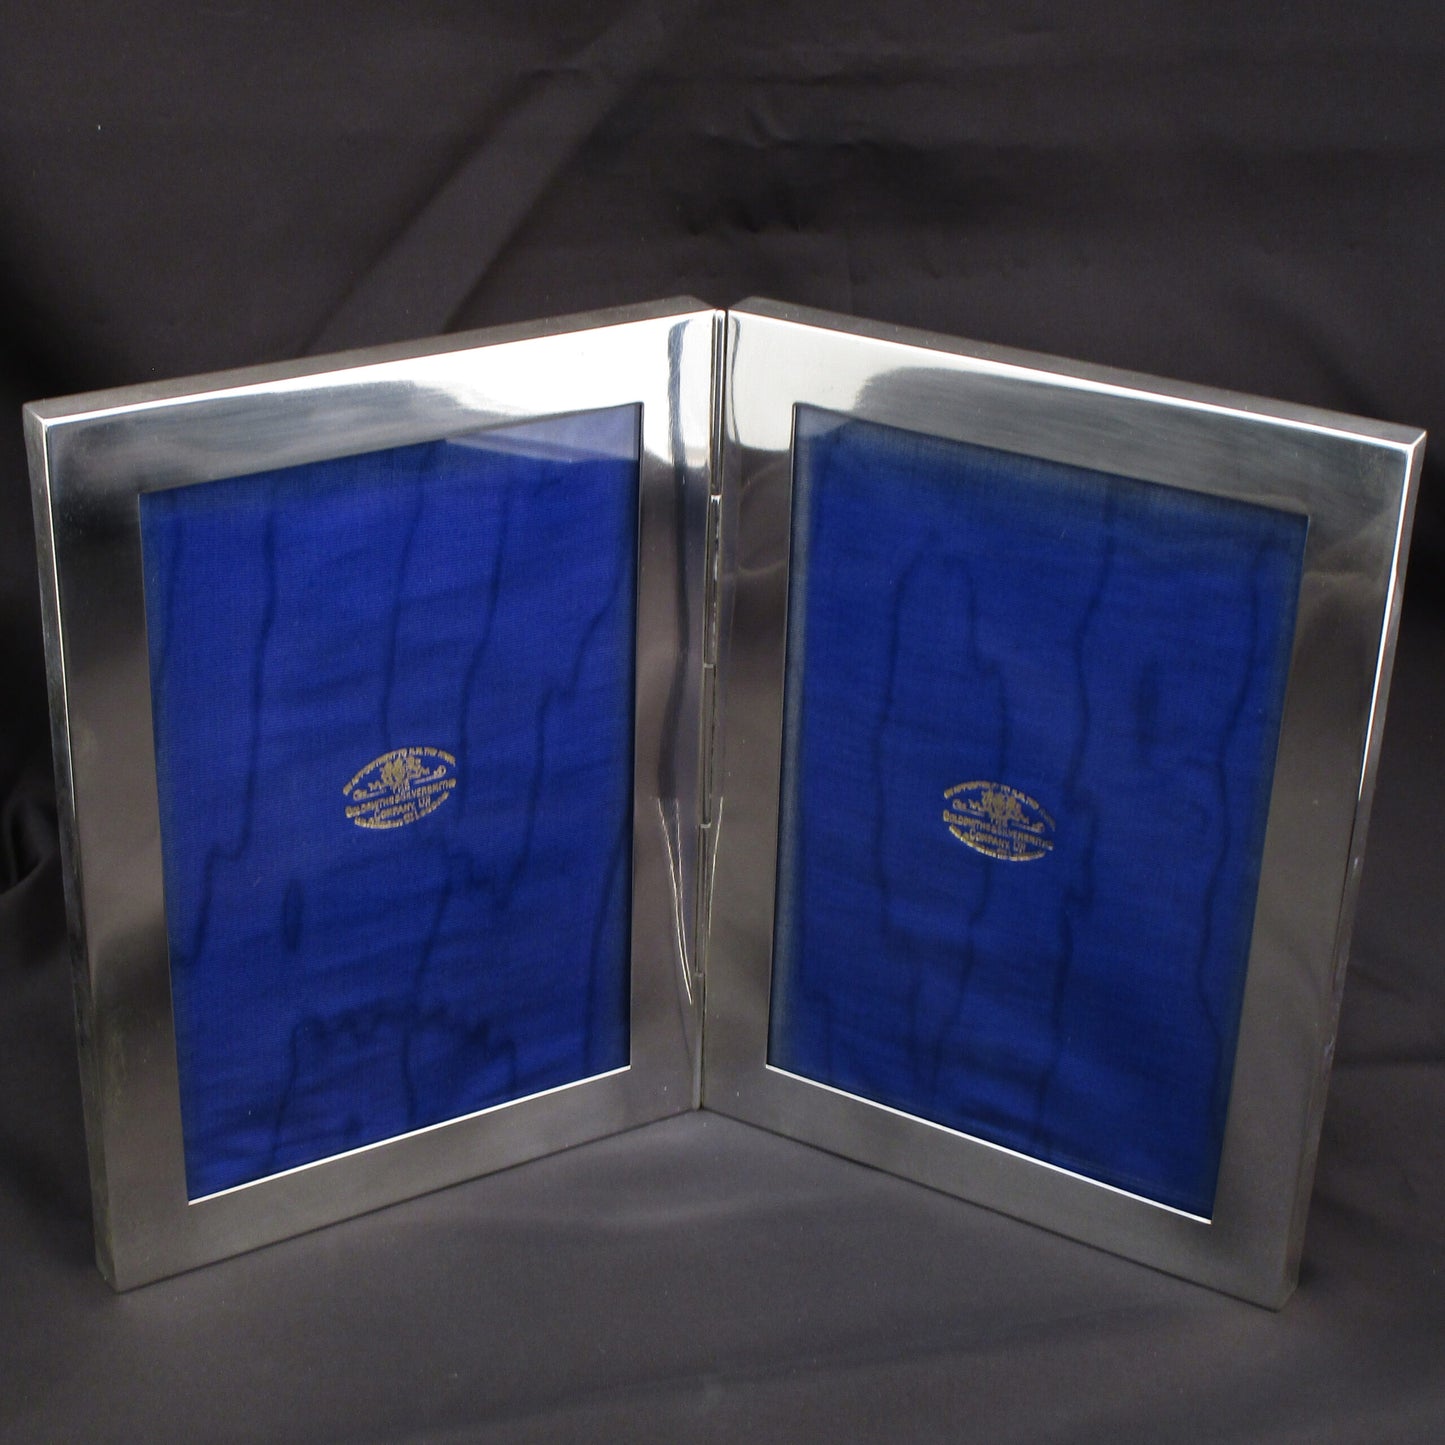 A wonderfull rare double photo frame by Goldsmiths & Silversmiths Co.